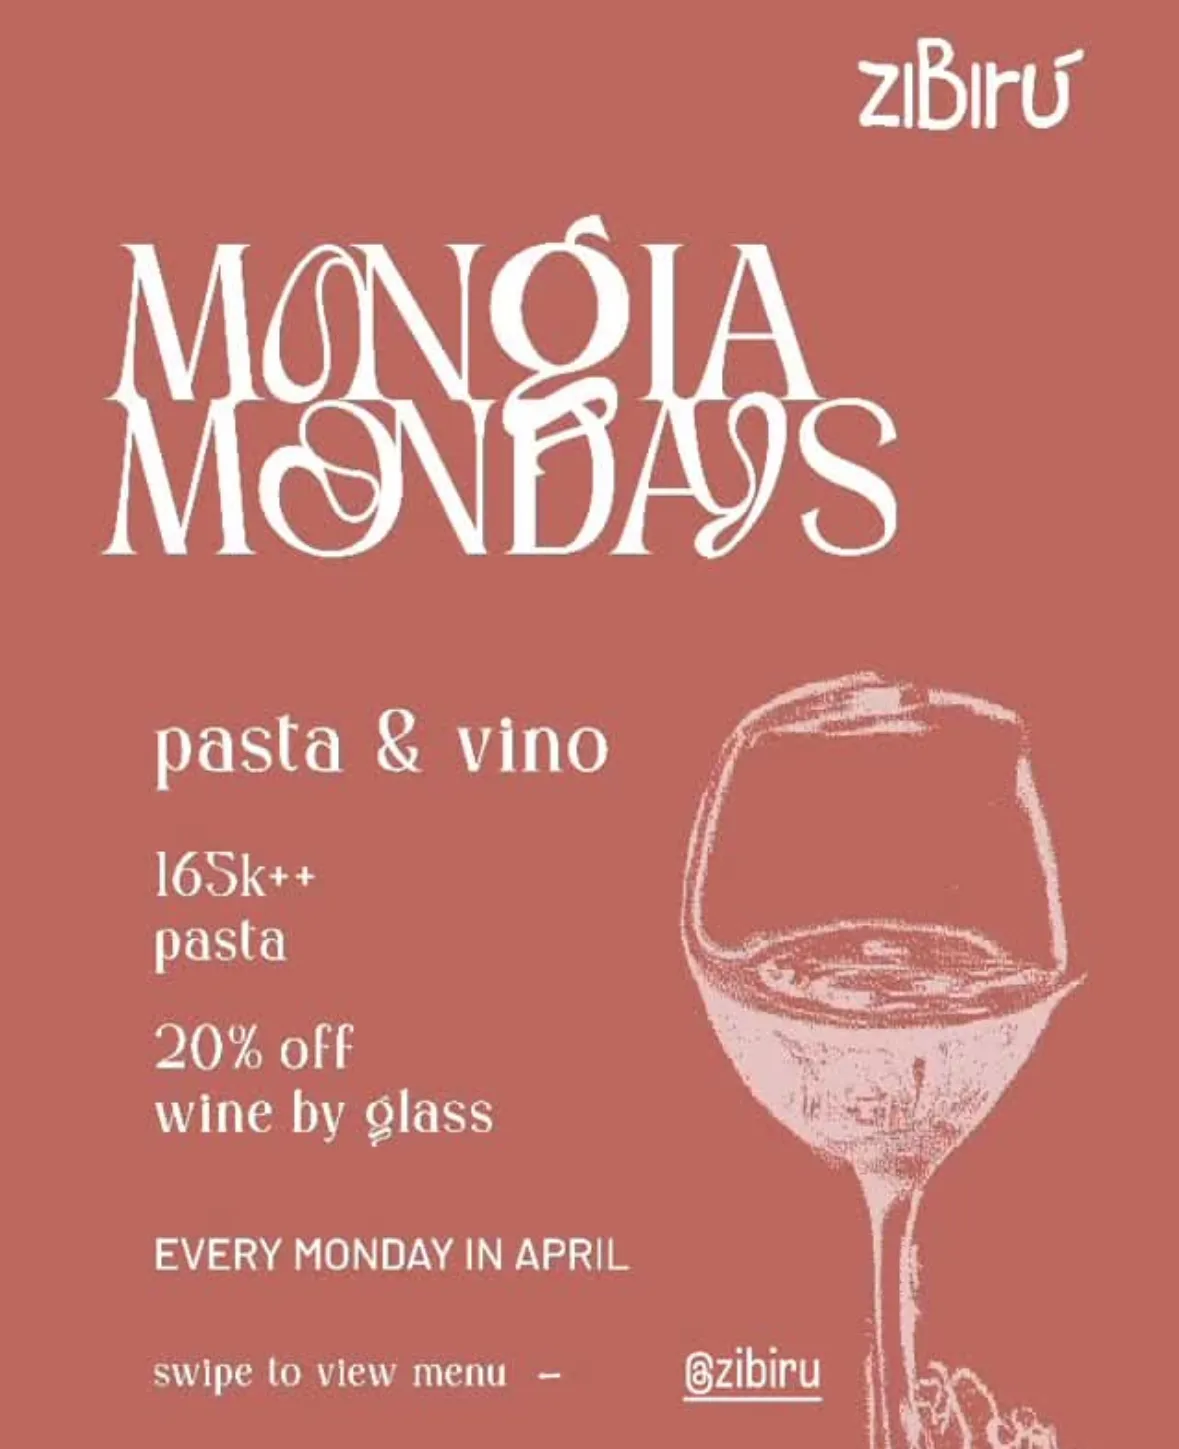 Drink Mongia Mondays 7520